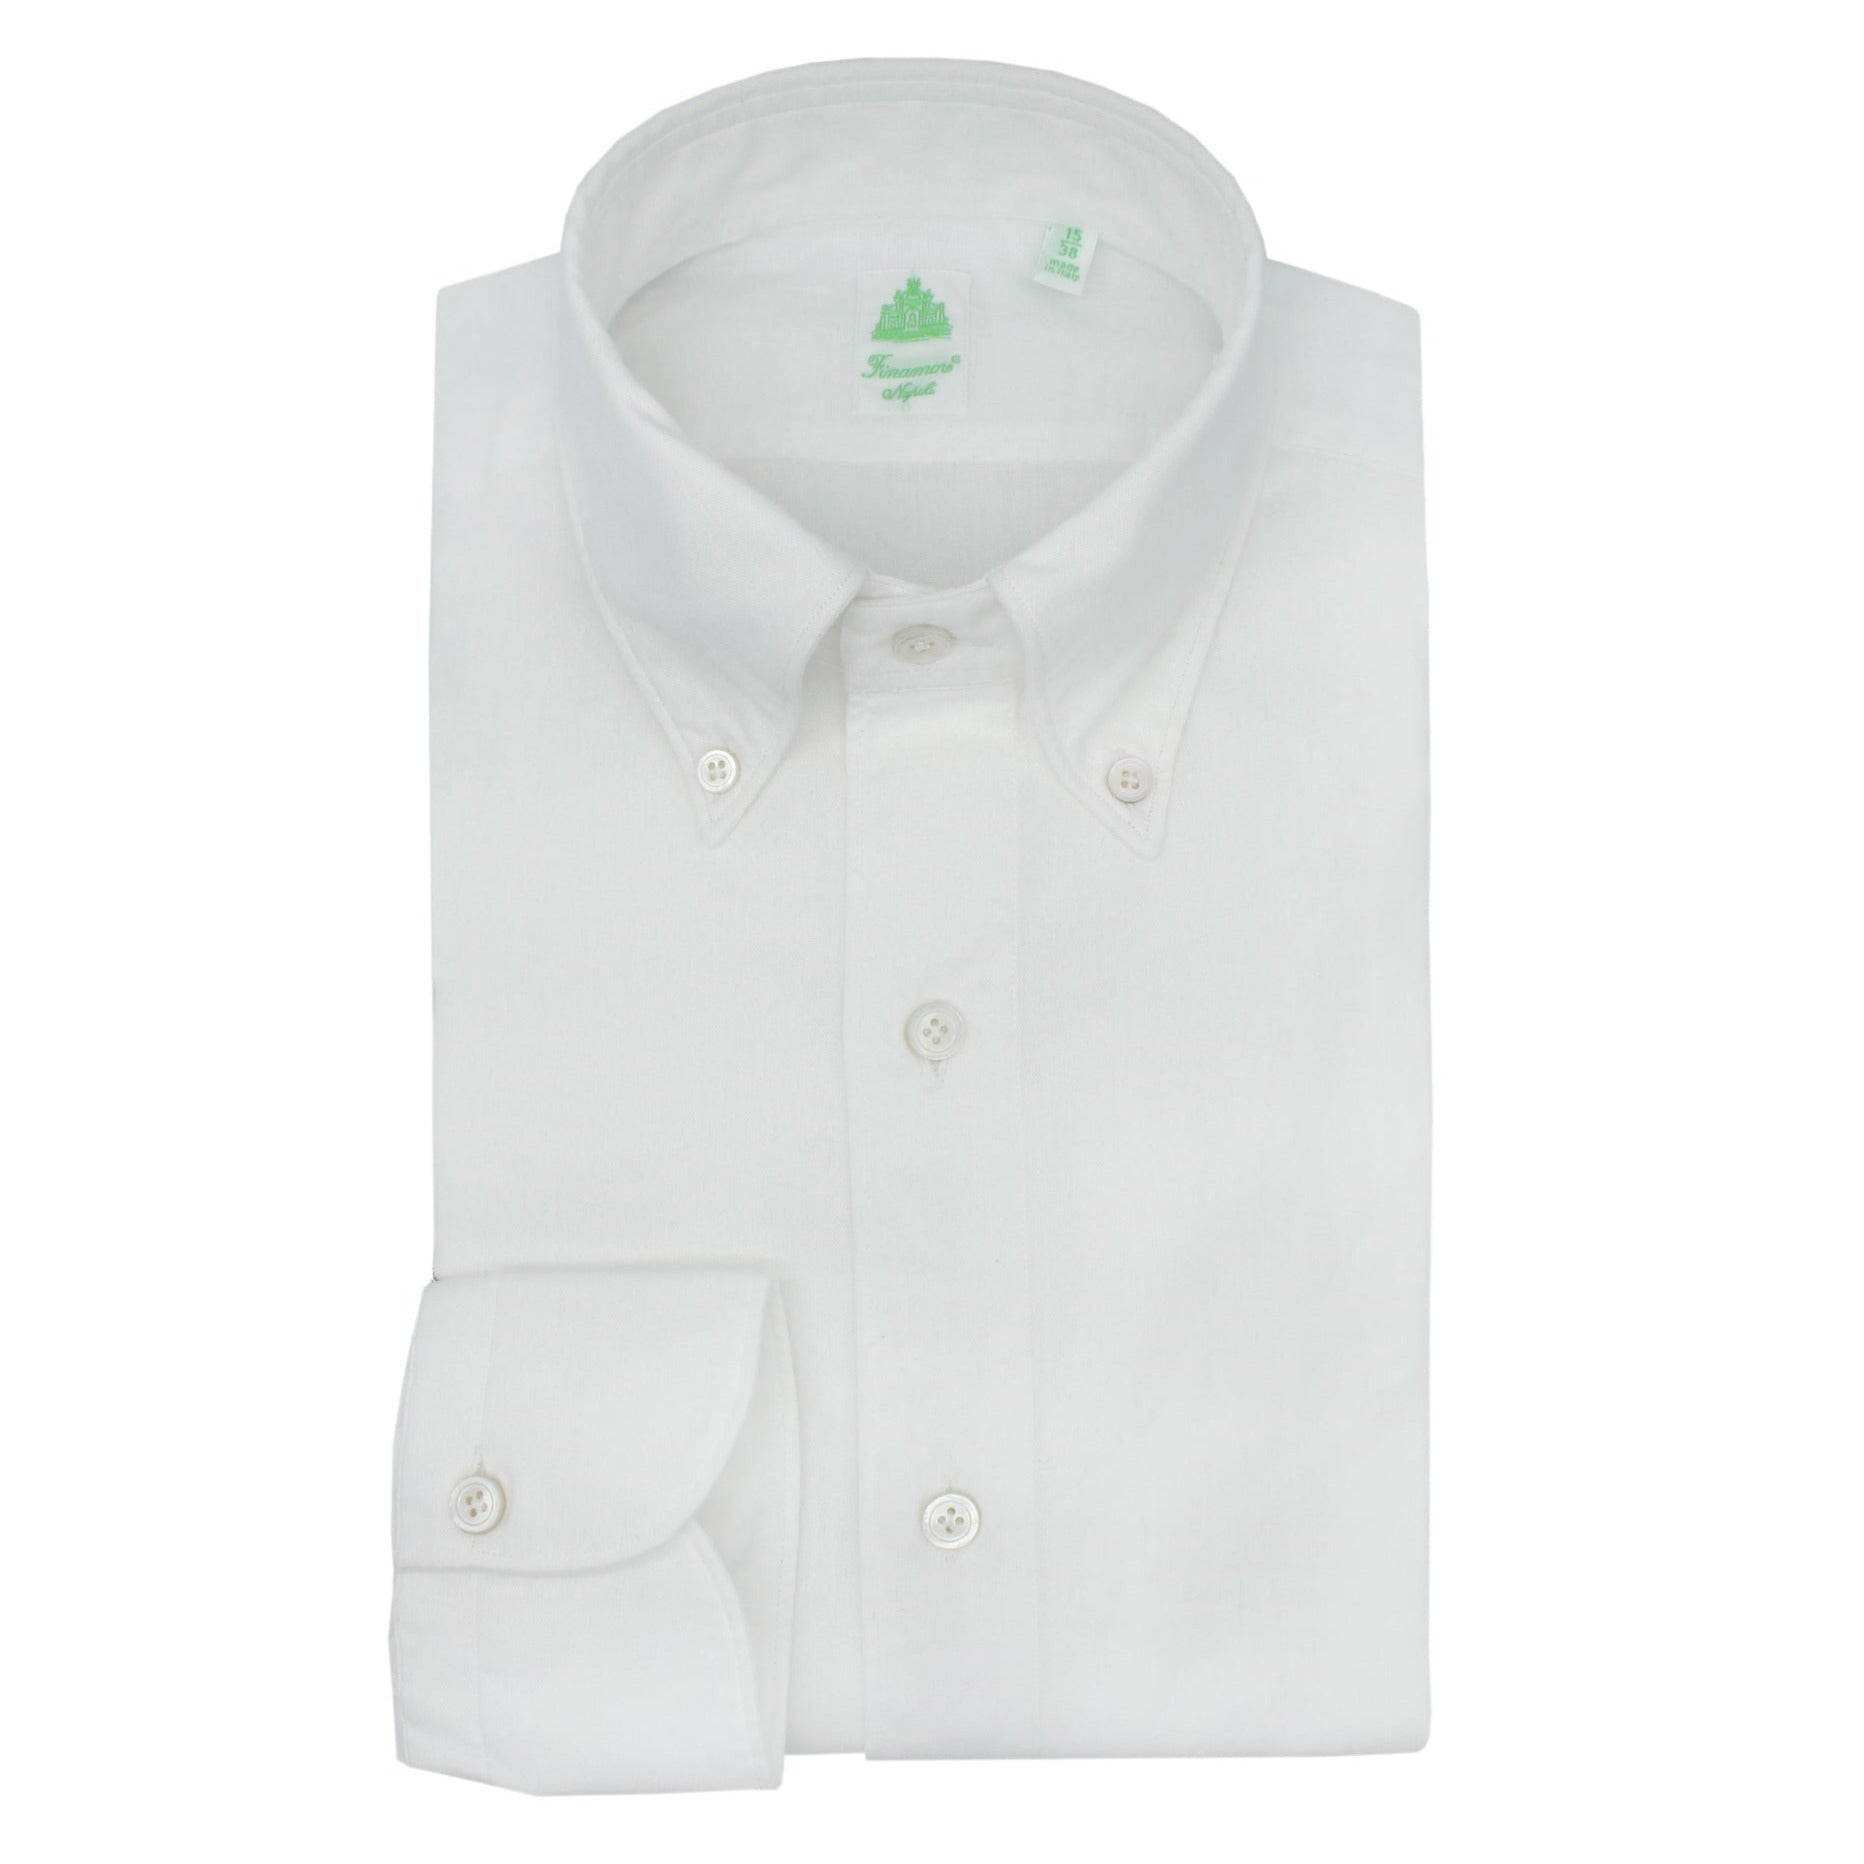 White Gaeta regular sport fit shirt with button down collar